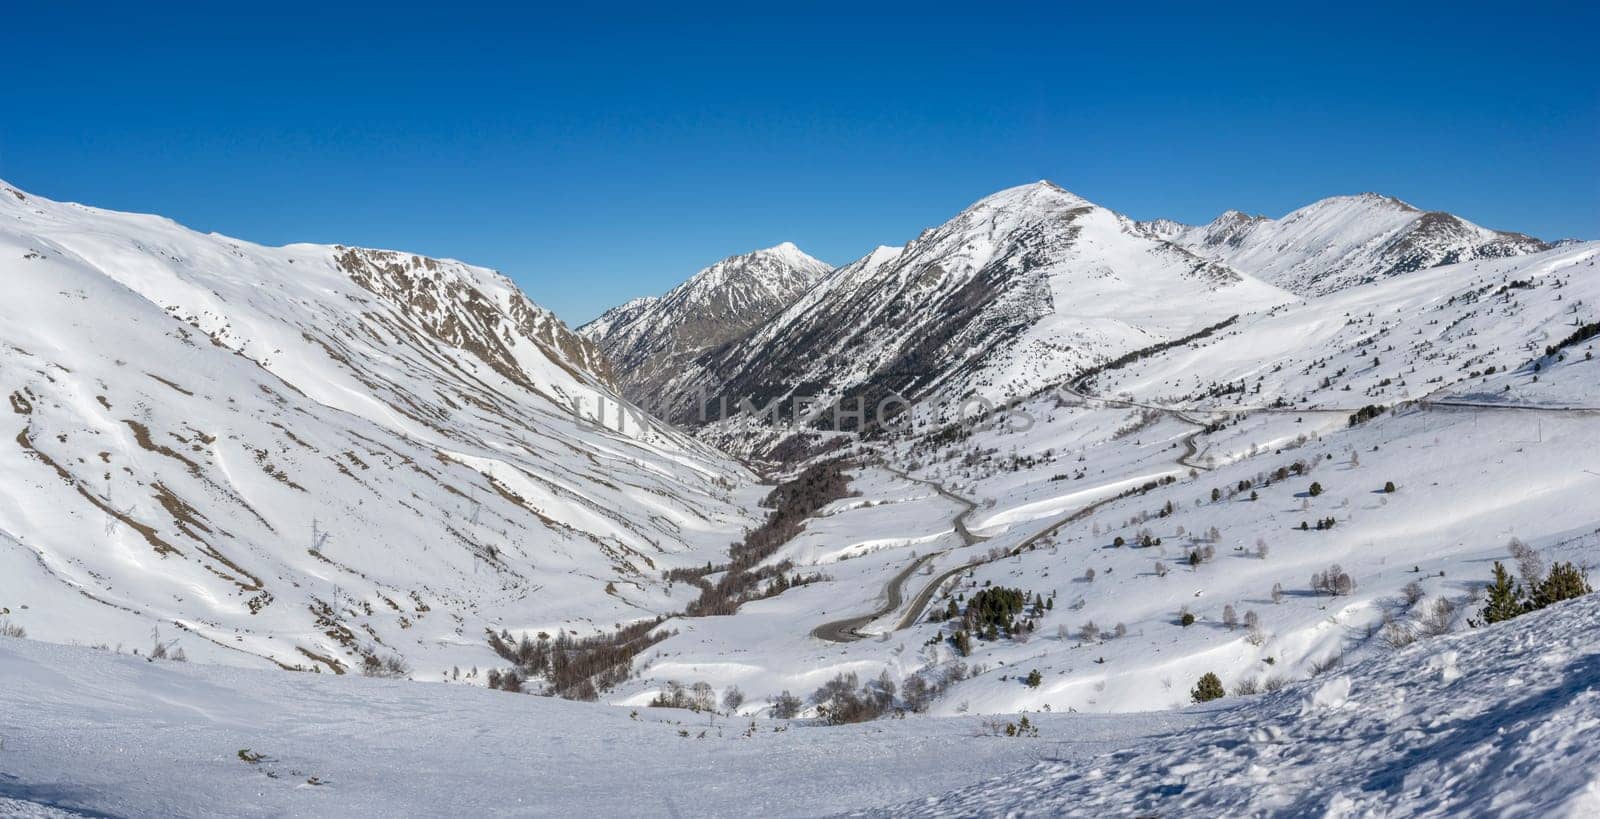 Winding Through Winter: Snowy Mountain Pass by Juanjo39